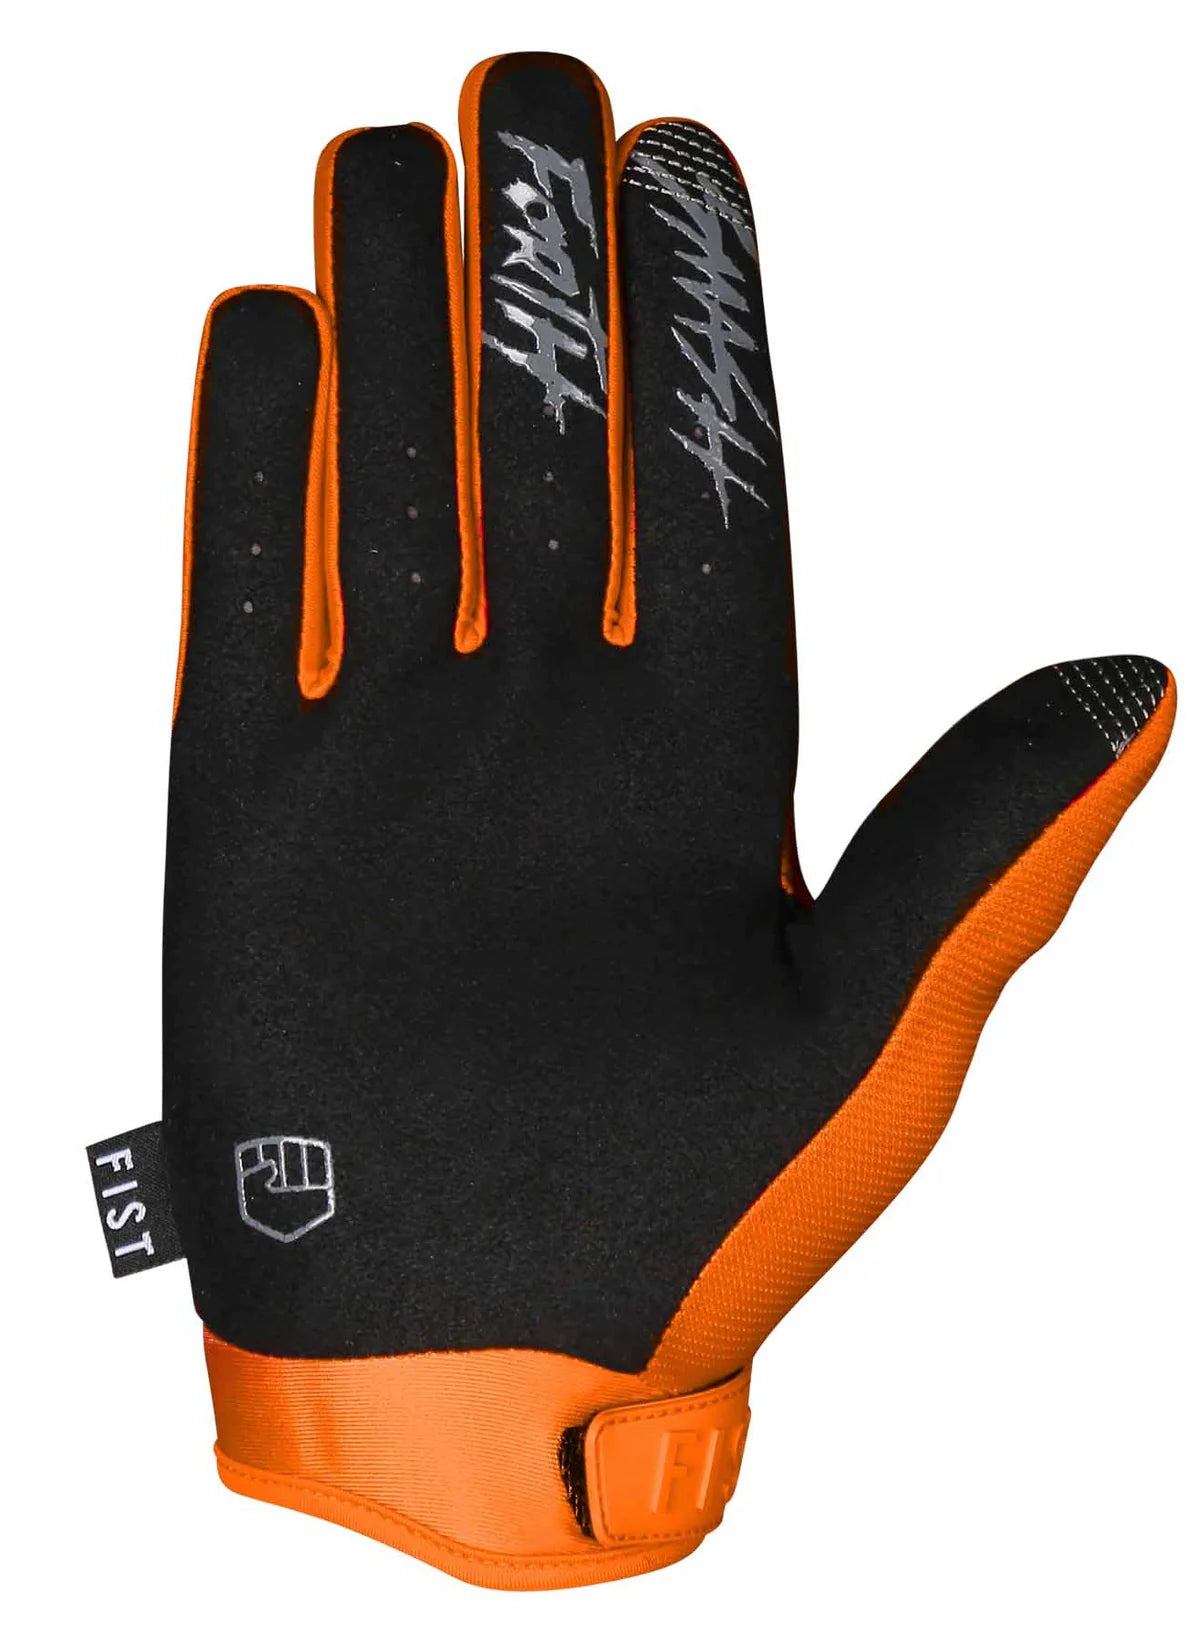 FIST Orange Stocker Glove